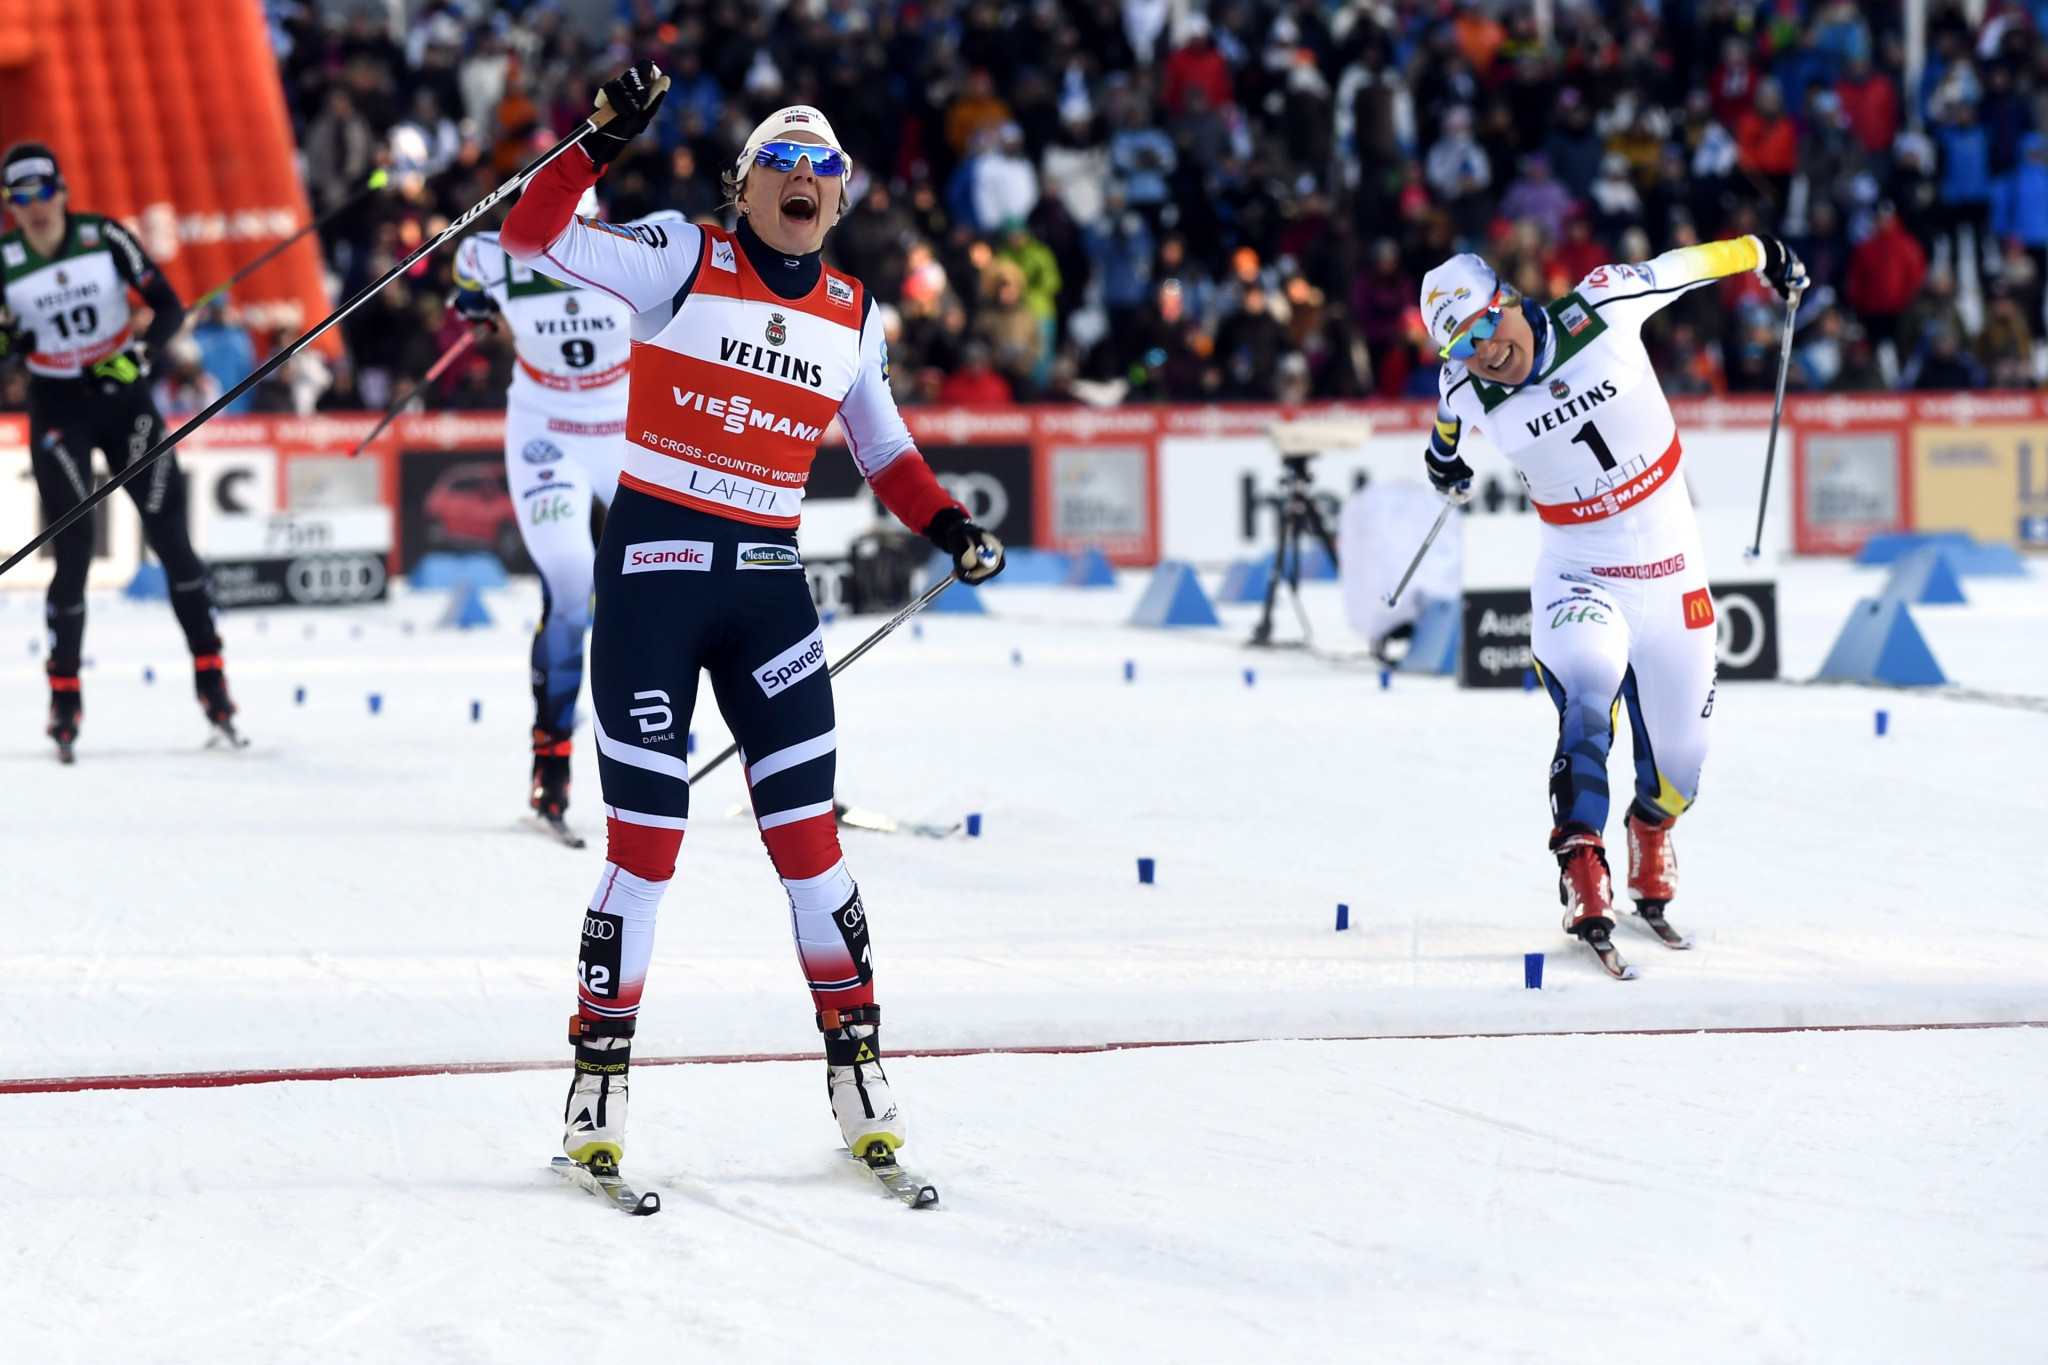 Norway's Maiken Caspersen Falla secured victory in a fast-paced women's final ©Getty Images